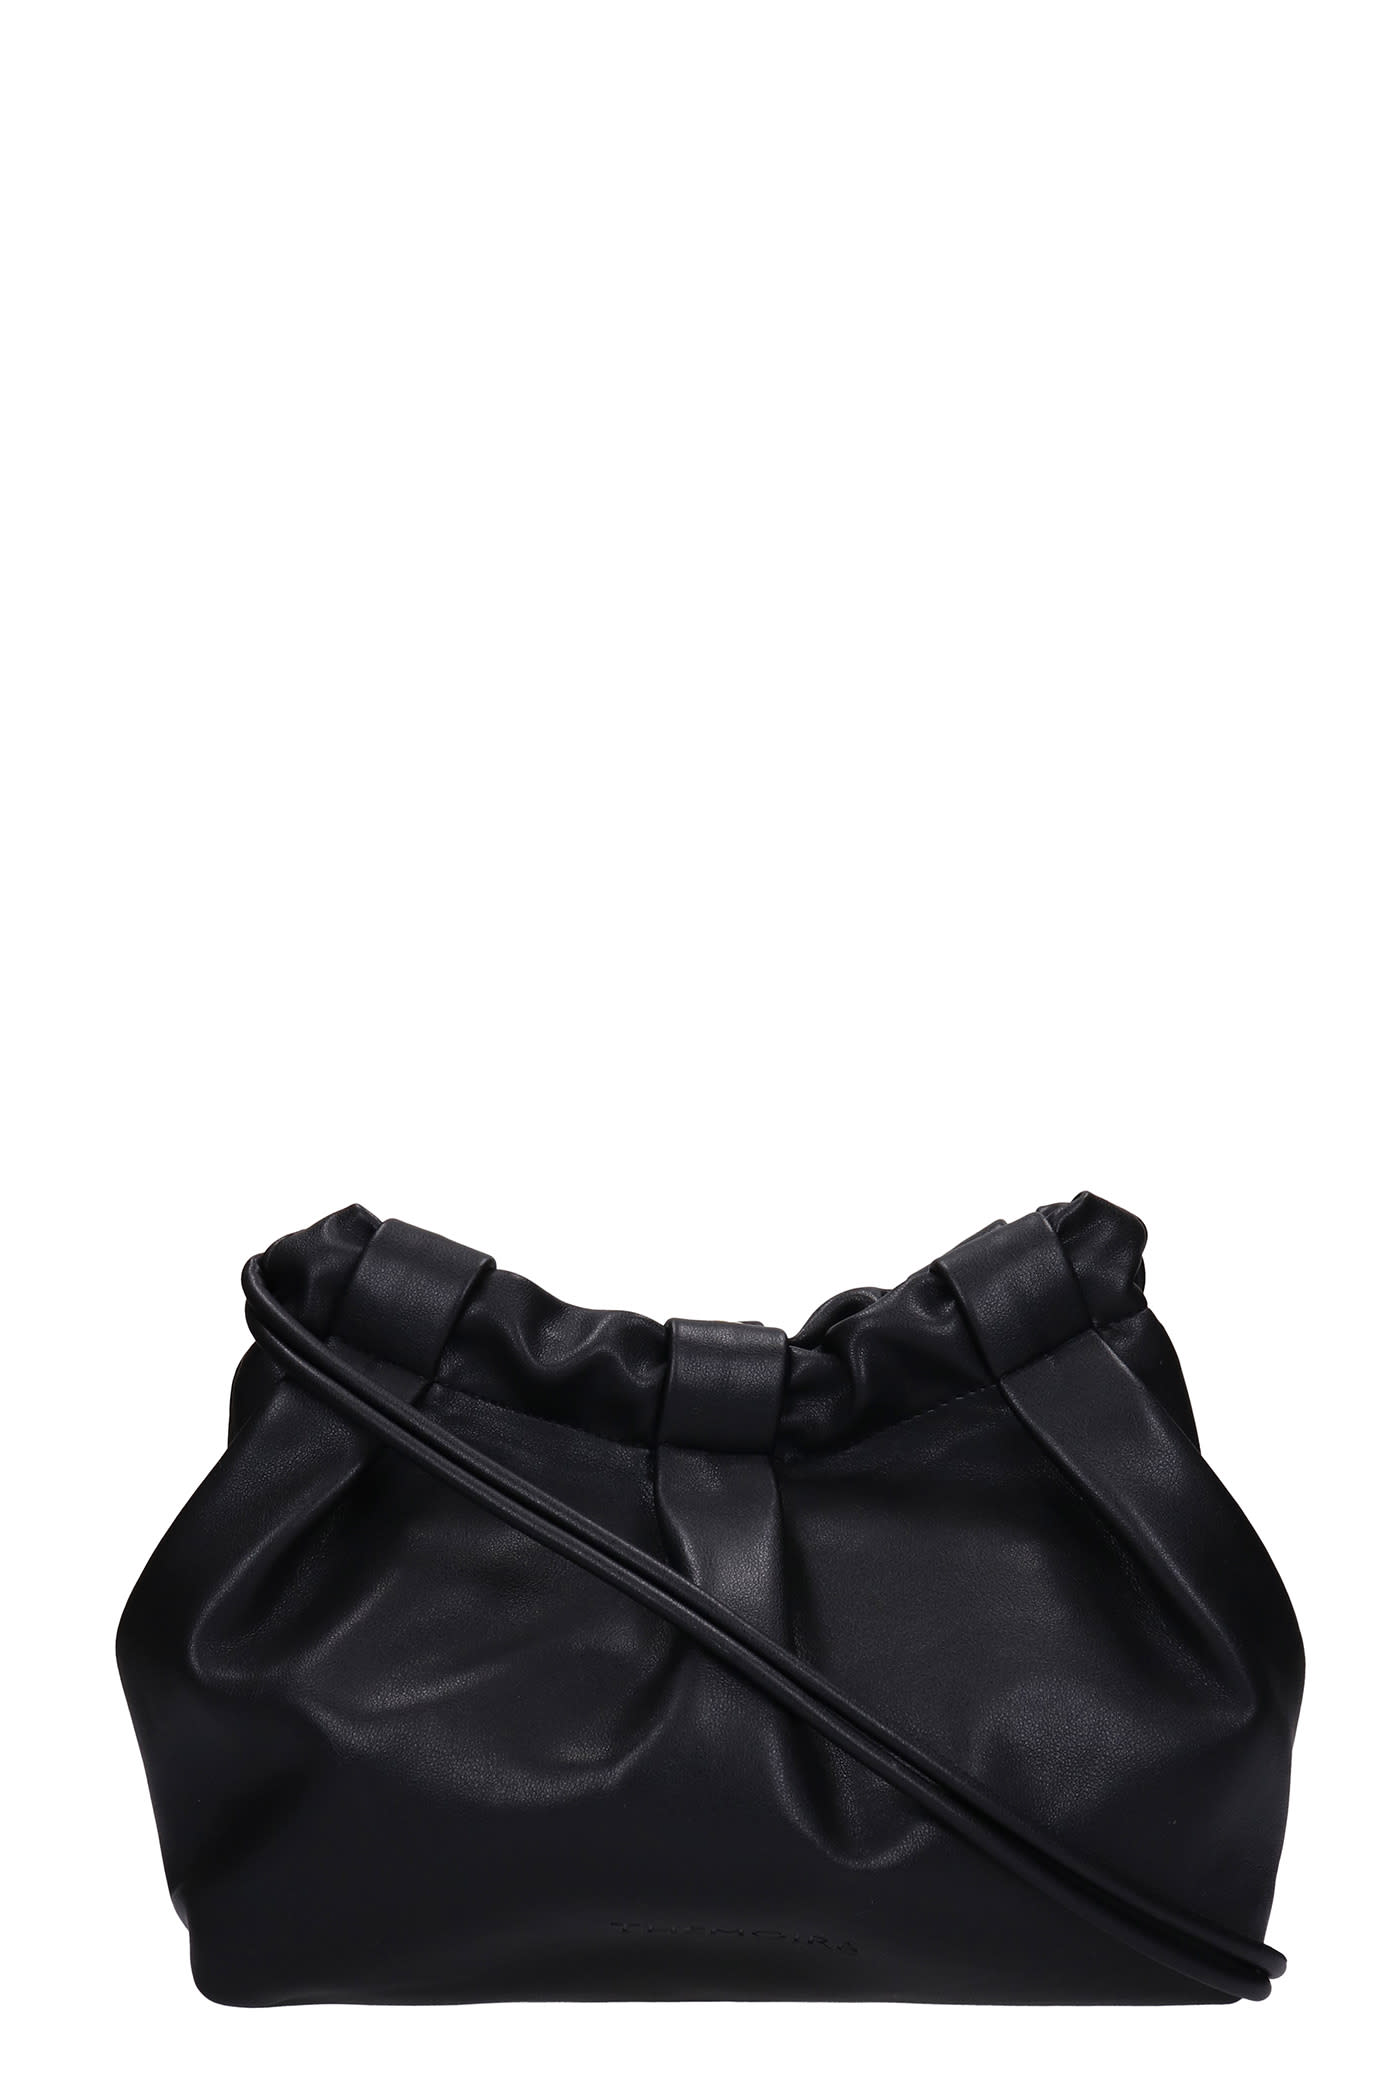 THEMOIRè Thetis Basic Shoulder Bag In Black Faux Leather